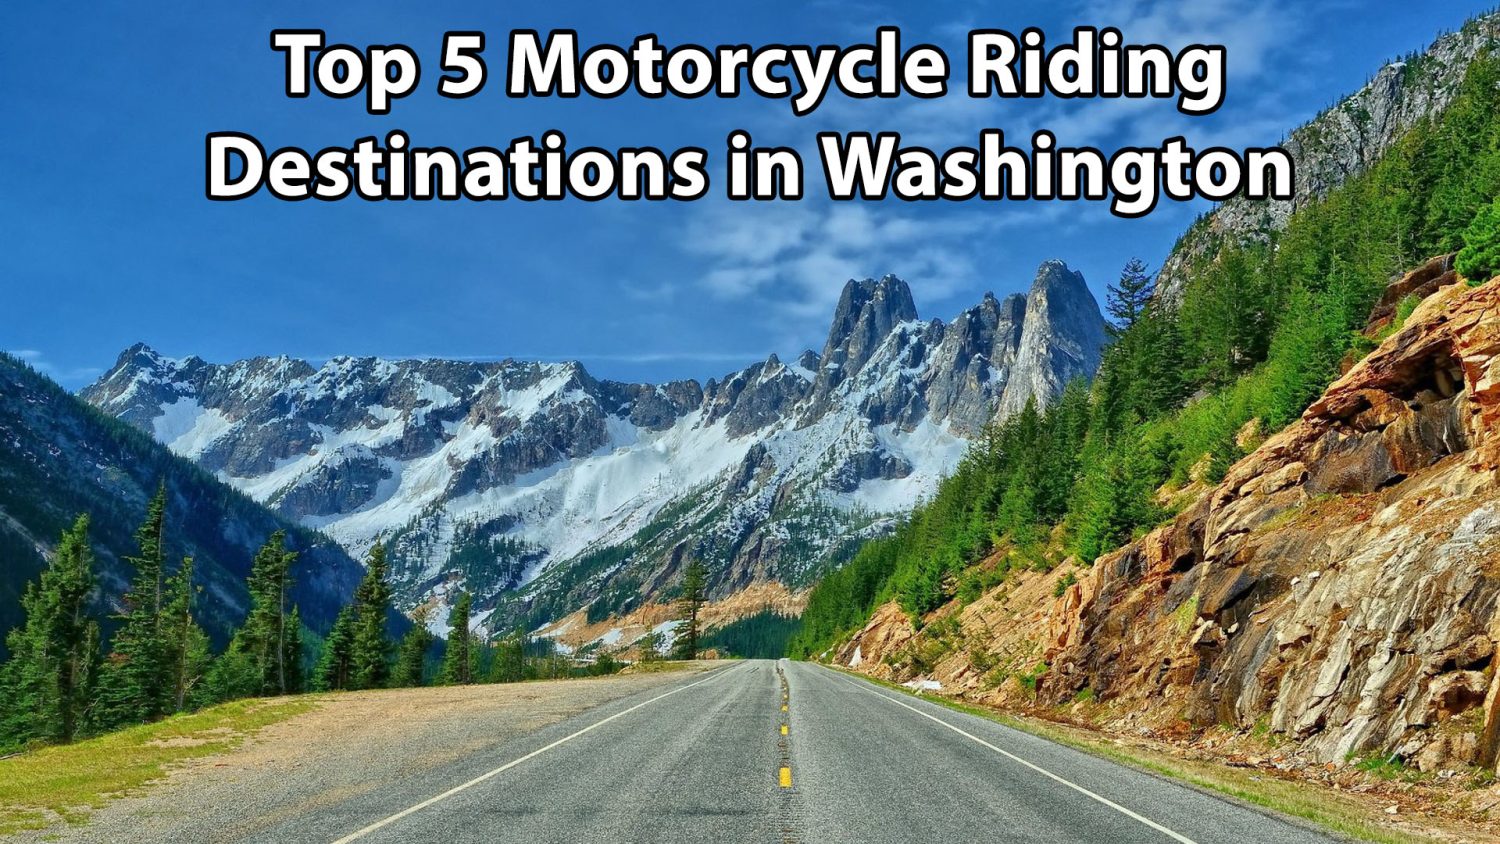 Top 5 Motorcycle Riding Destinations in Washington